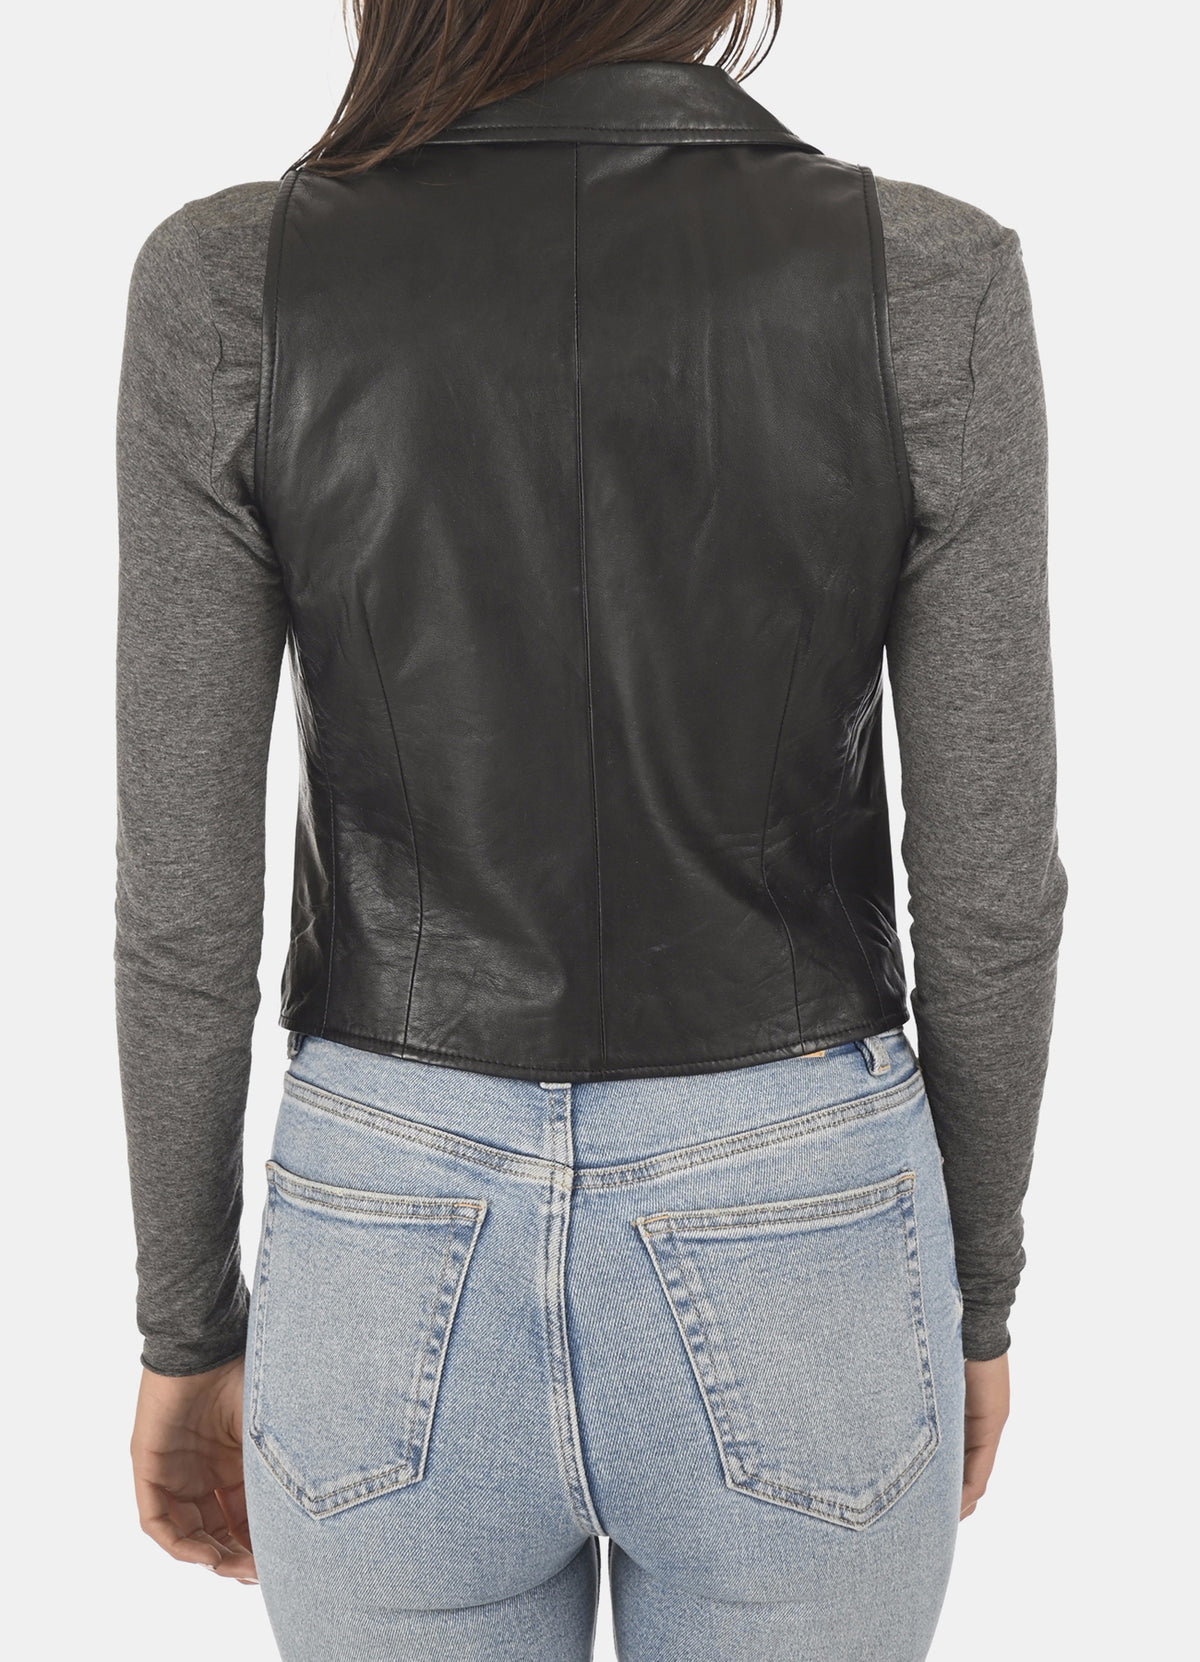 Womens Charcoal Black Leather Vest